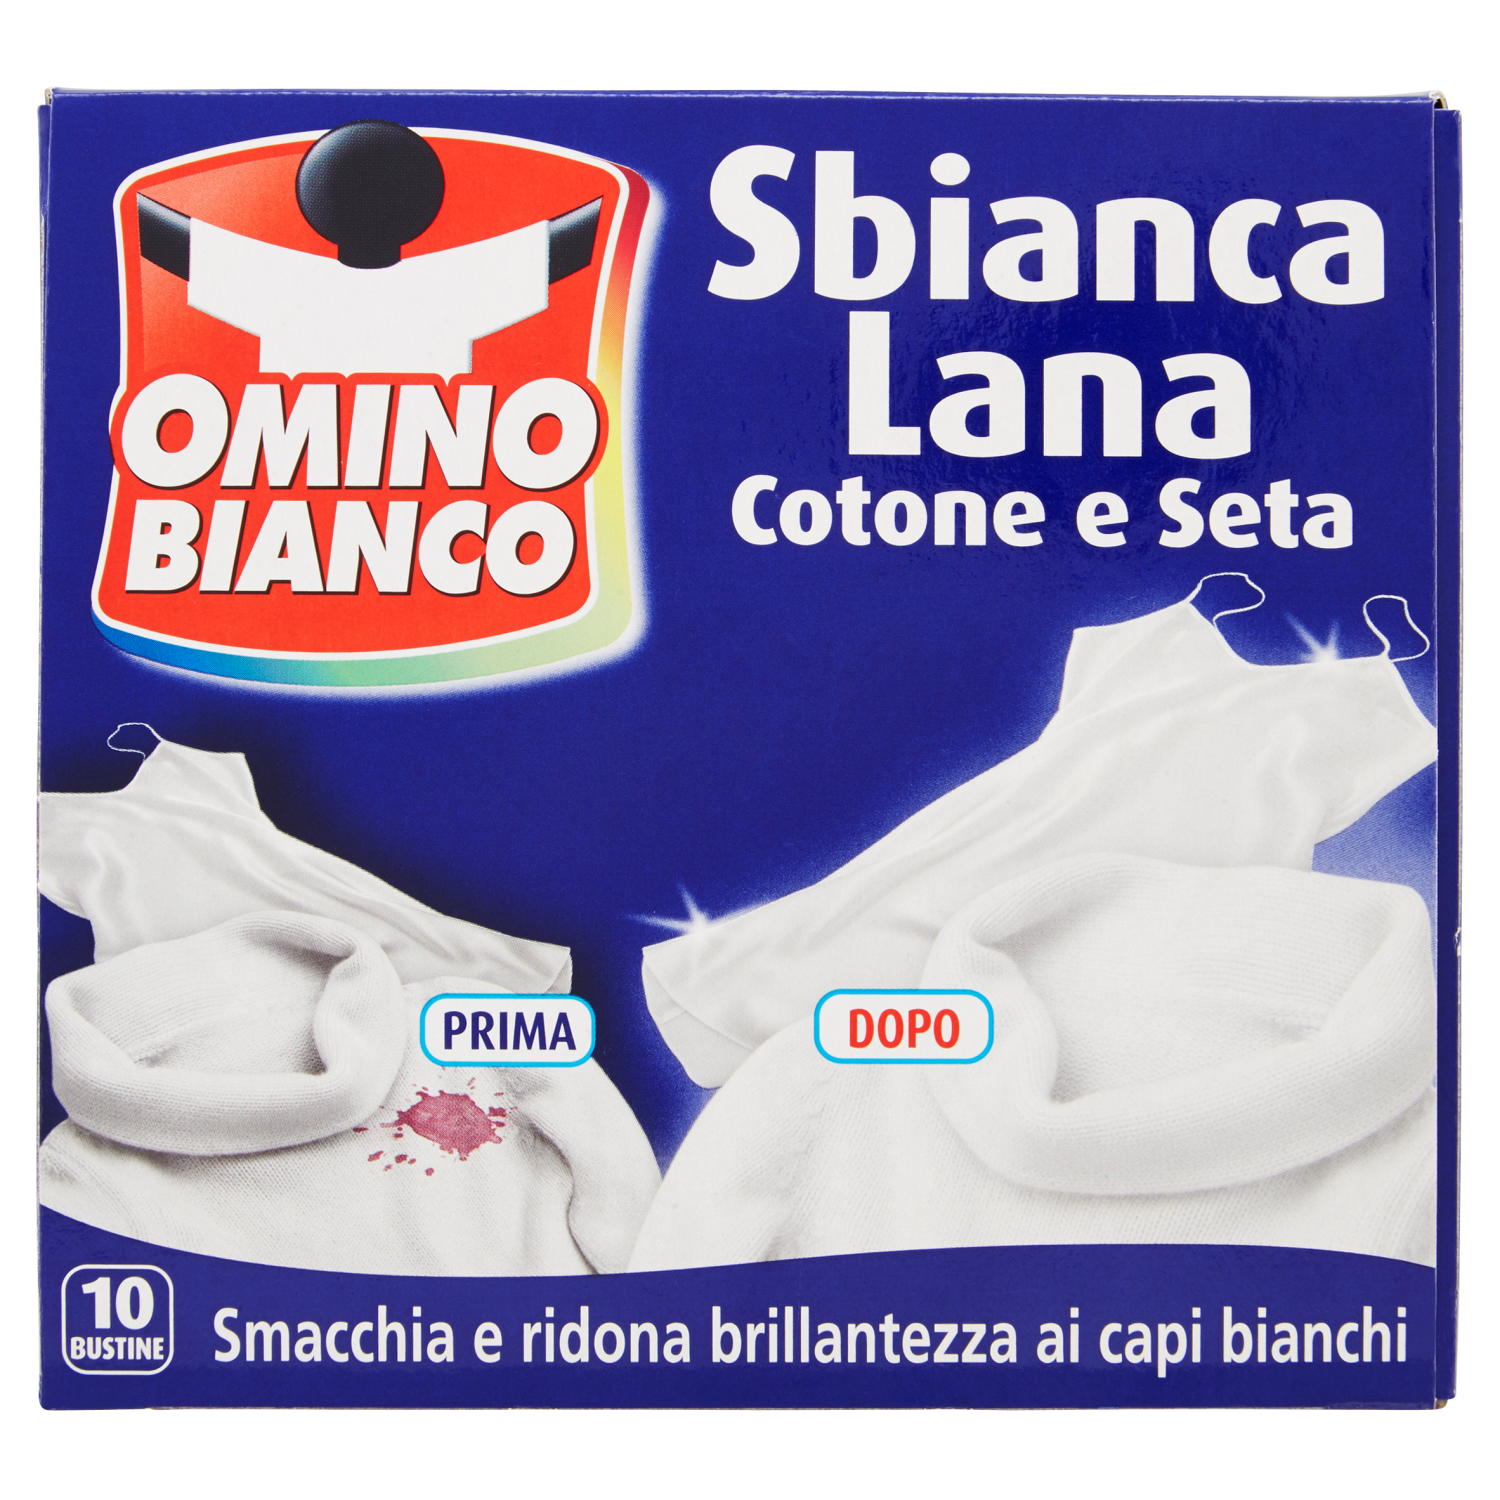 Omino Bianco Sbianca Lana Cotone e Seta 10 x 20 g